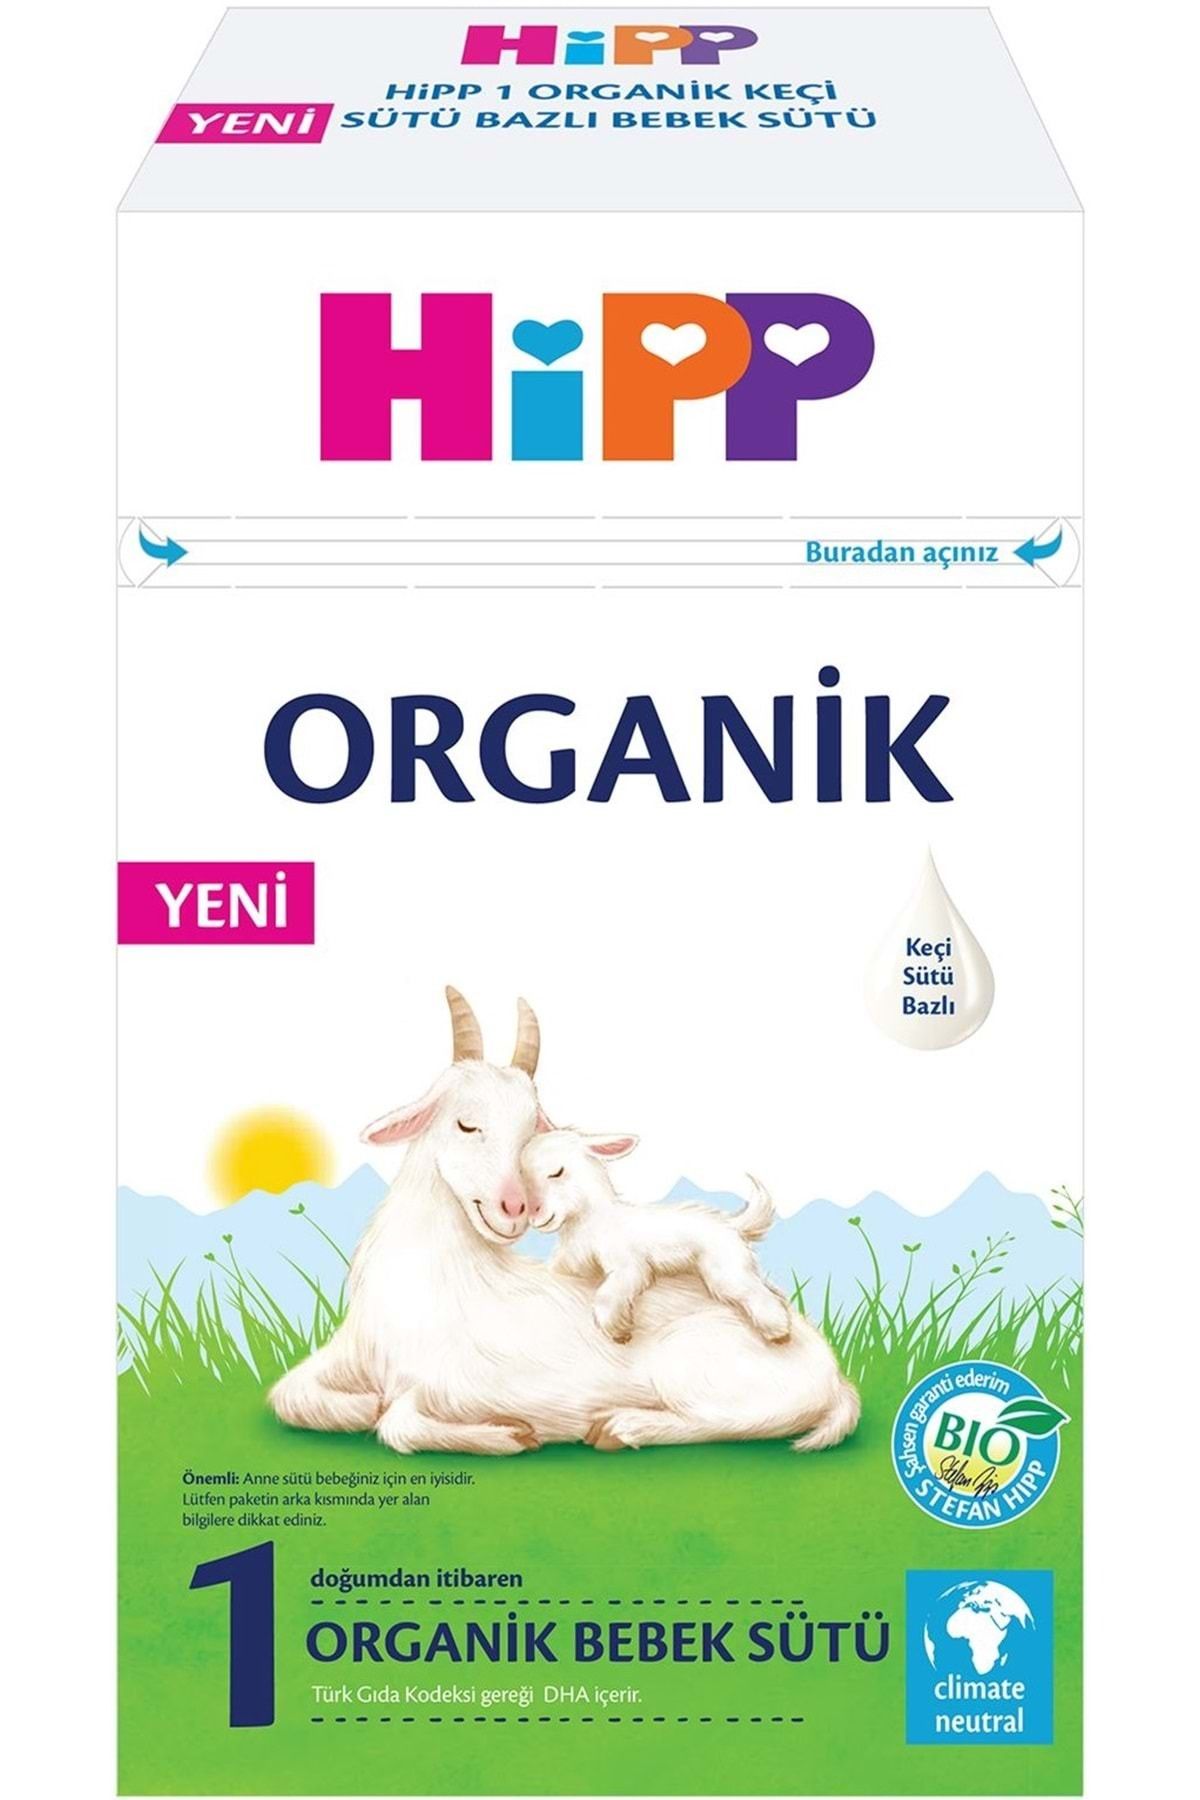 Hipp Organik Keçi Sütü Bazlı Devam Sütü 400gr No:1 (0-6 AY)